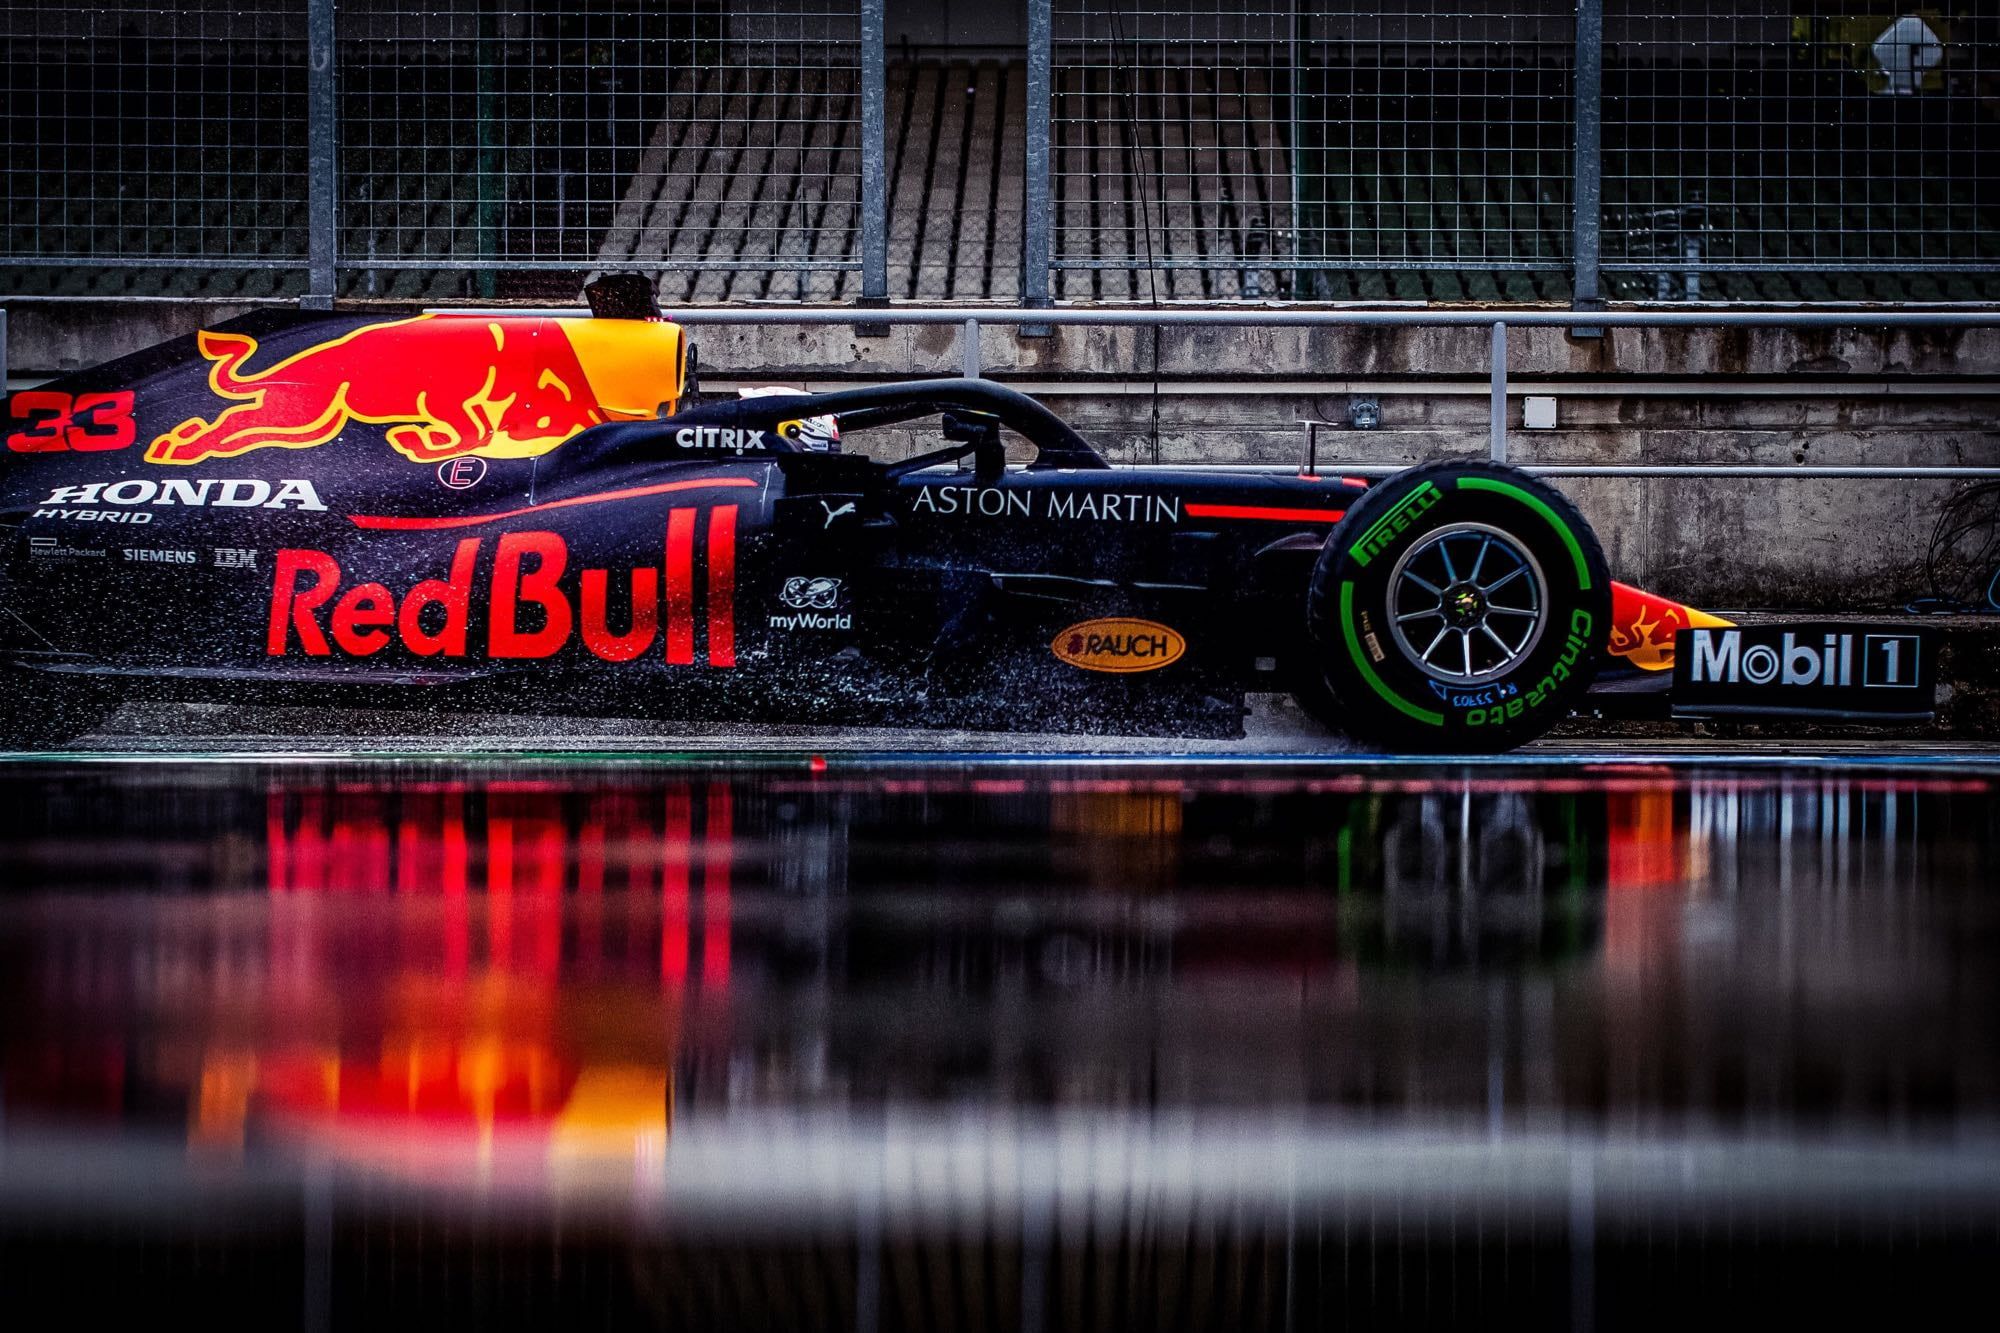 Red Bull Red Bull Racing Max Verstappen Aston Martin #Honda MOBIL 1 P # wallpaper #hdwallpaper #desktop. Red bull racing, Red bull, Red bull f1